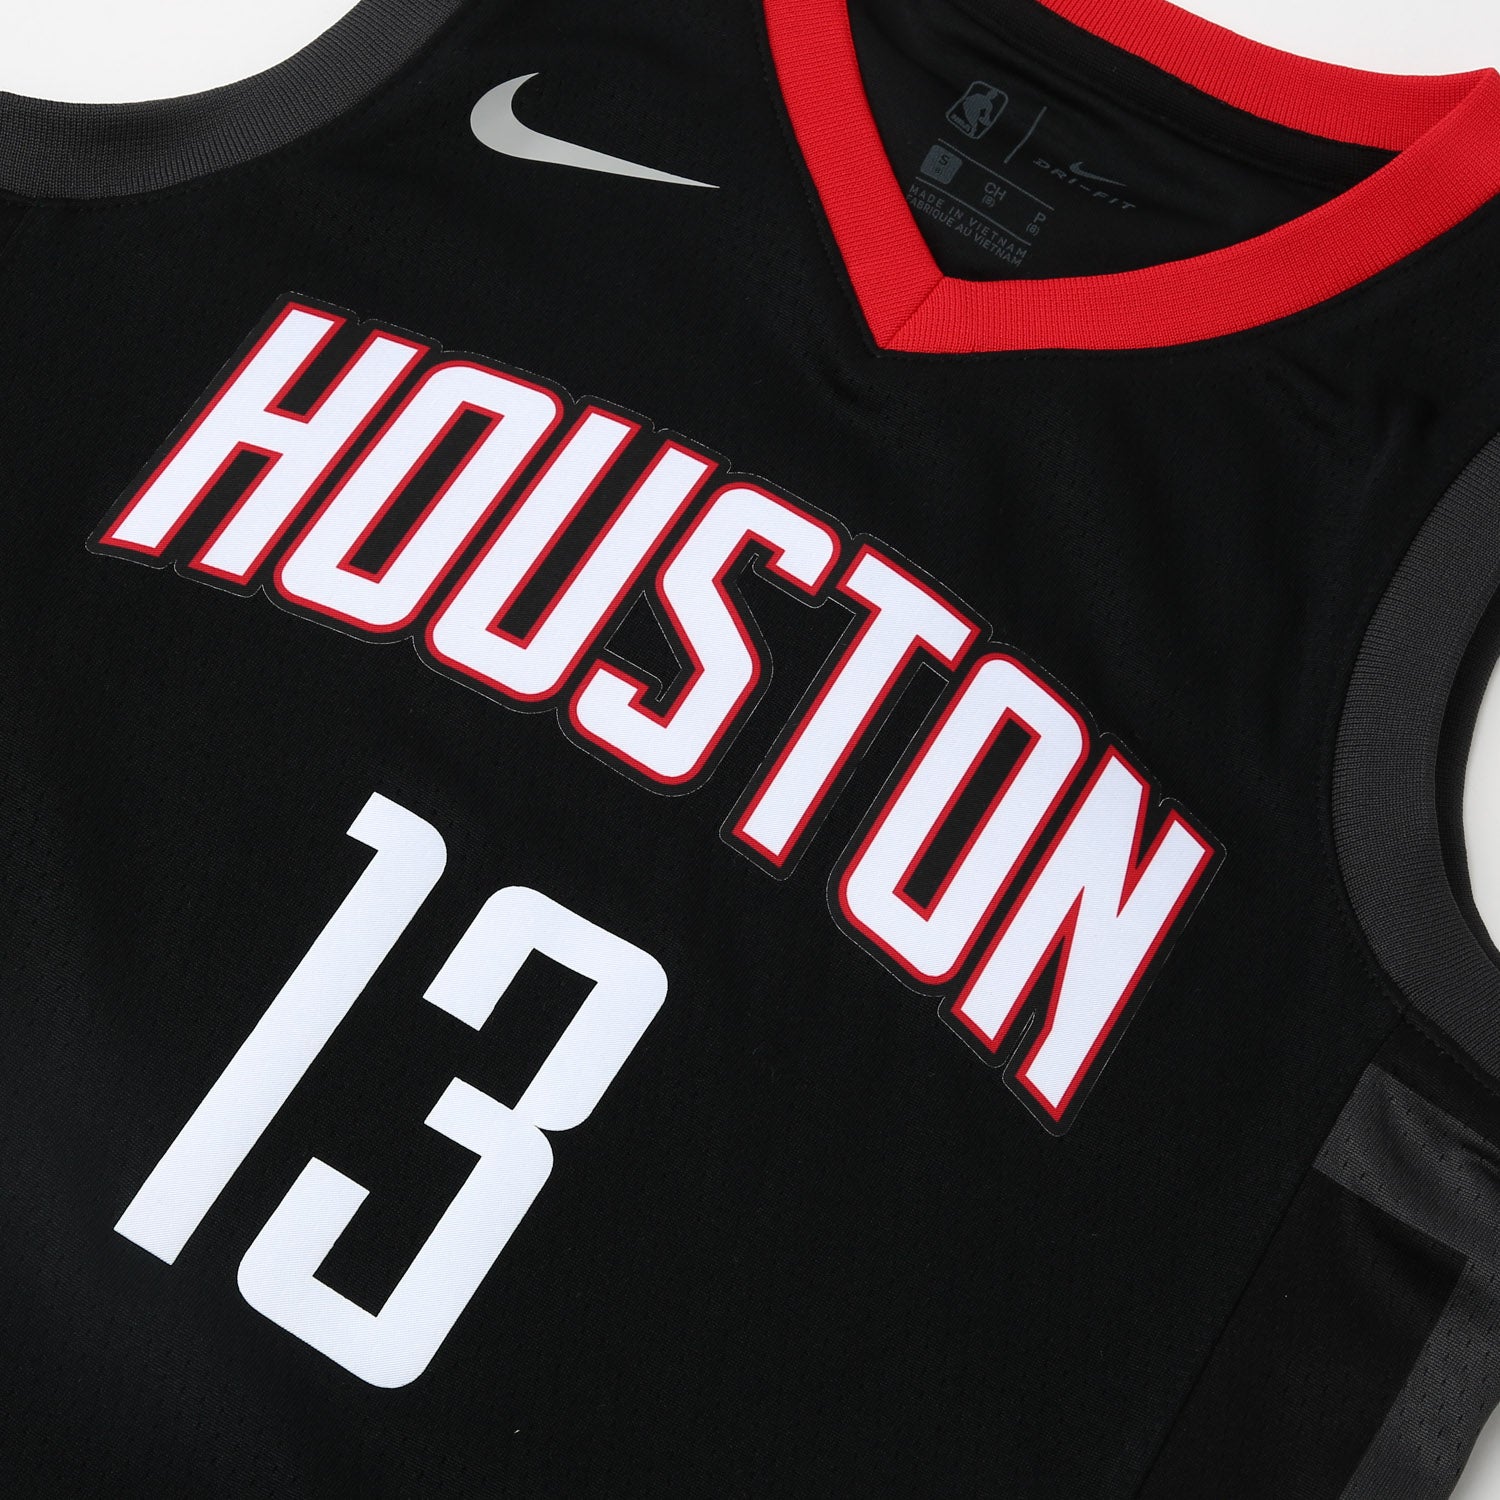 Nike Kids Houston Rockets James Harden 